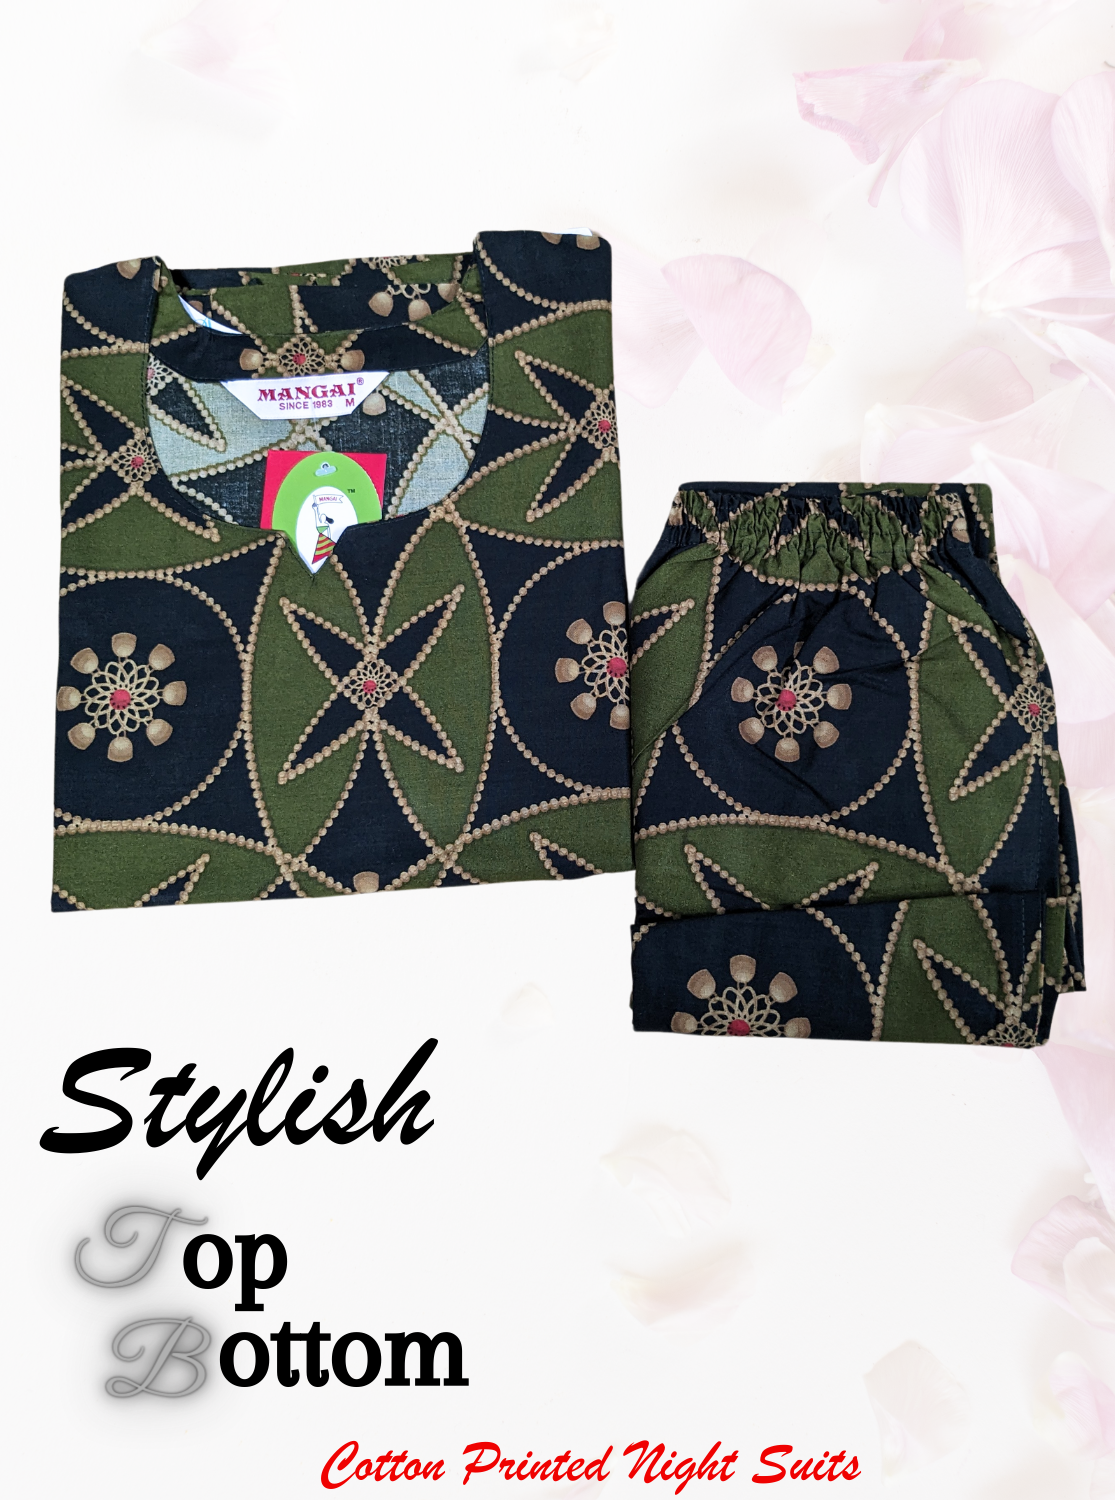 Stylish MANGAI New Premium Cotton Printed Night Suits- Stylish Printed Top & Bottom Set for Trendy Women's